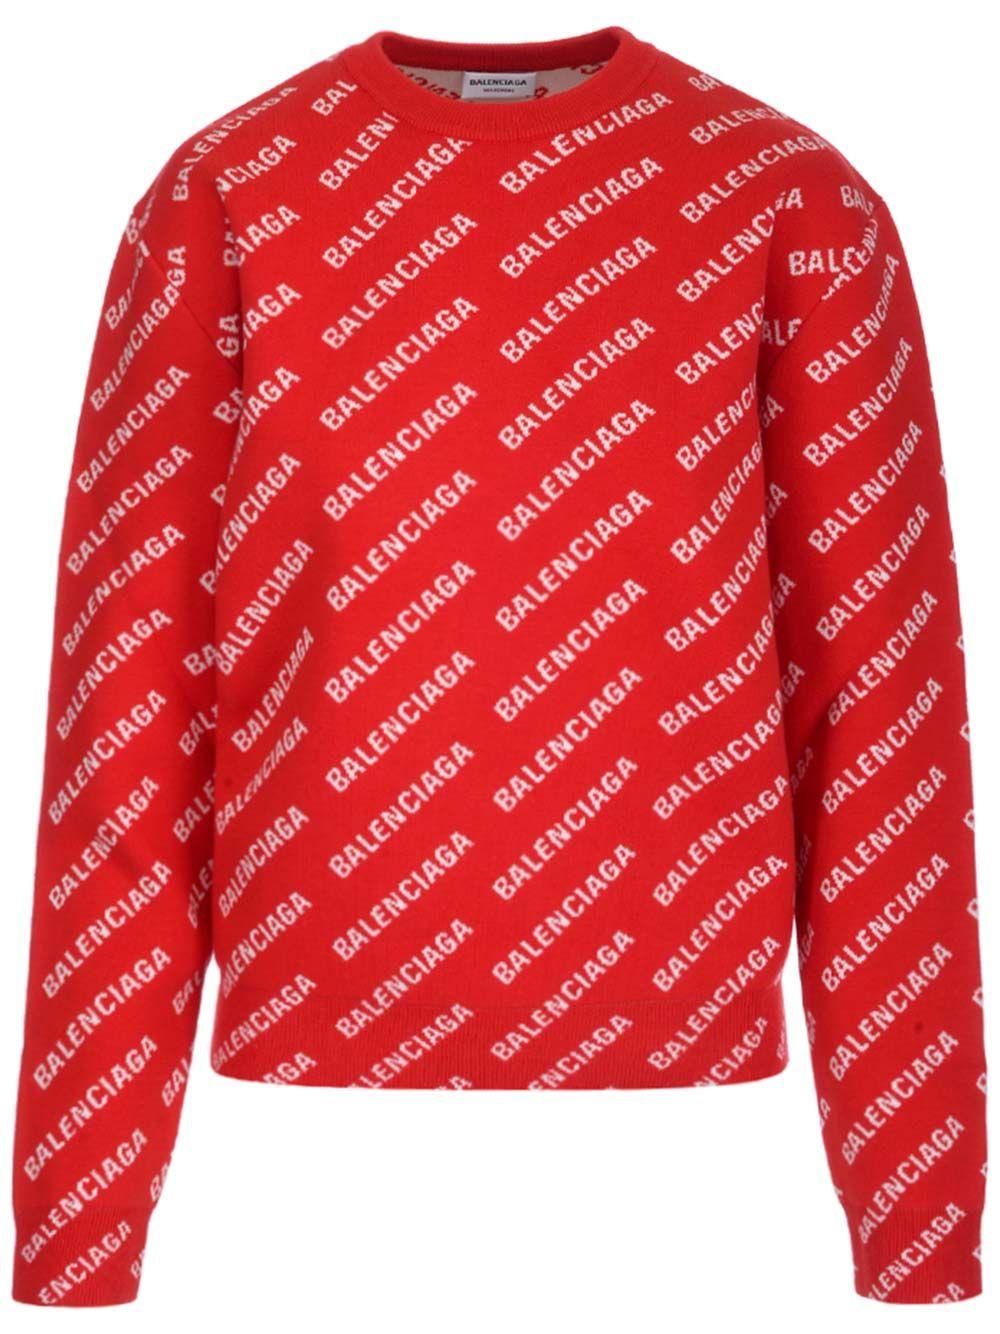 Balenciaga Cotton Crewneck Logo Sweater in Red - Save 62% | Lyst